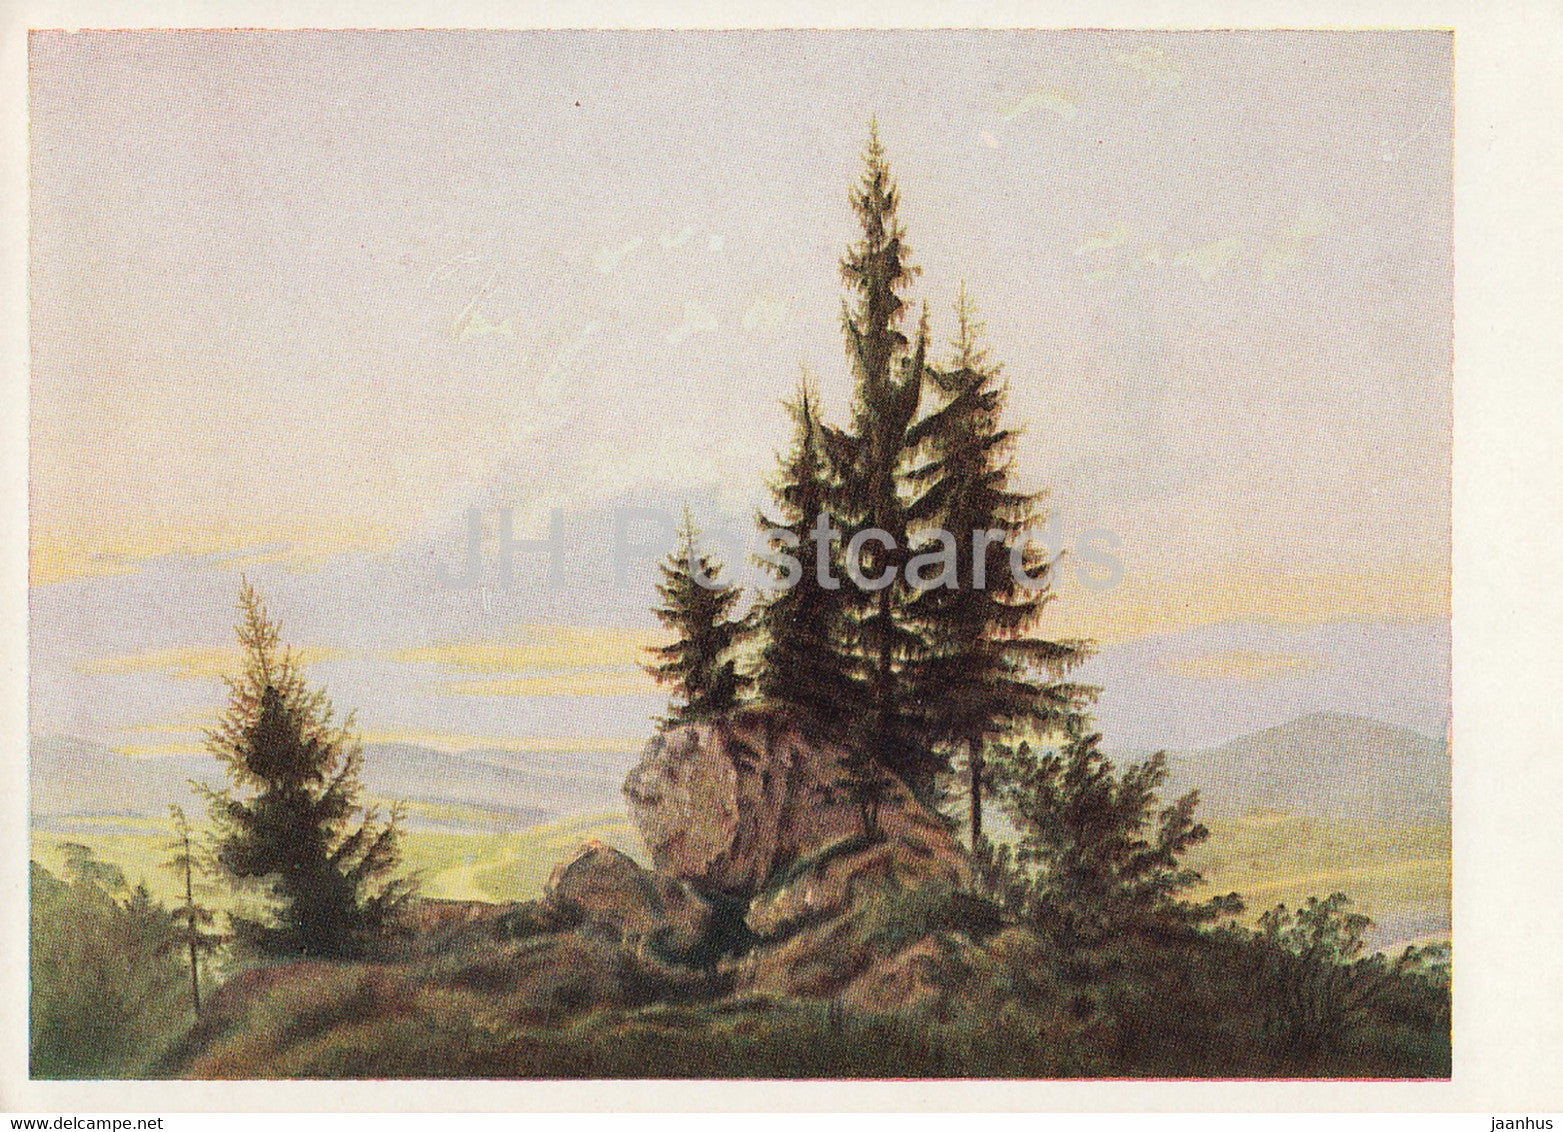 painting by Caspar David Friedrich - Ausblick in Elbtal - 1 - German art - Germany - used - JH Postcards